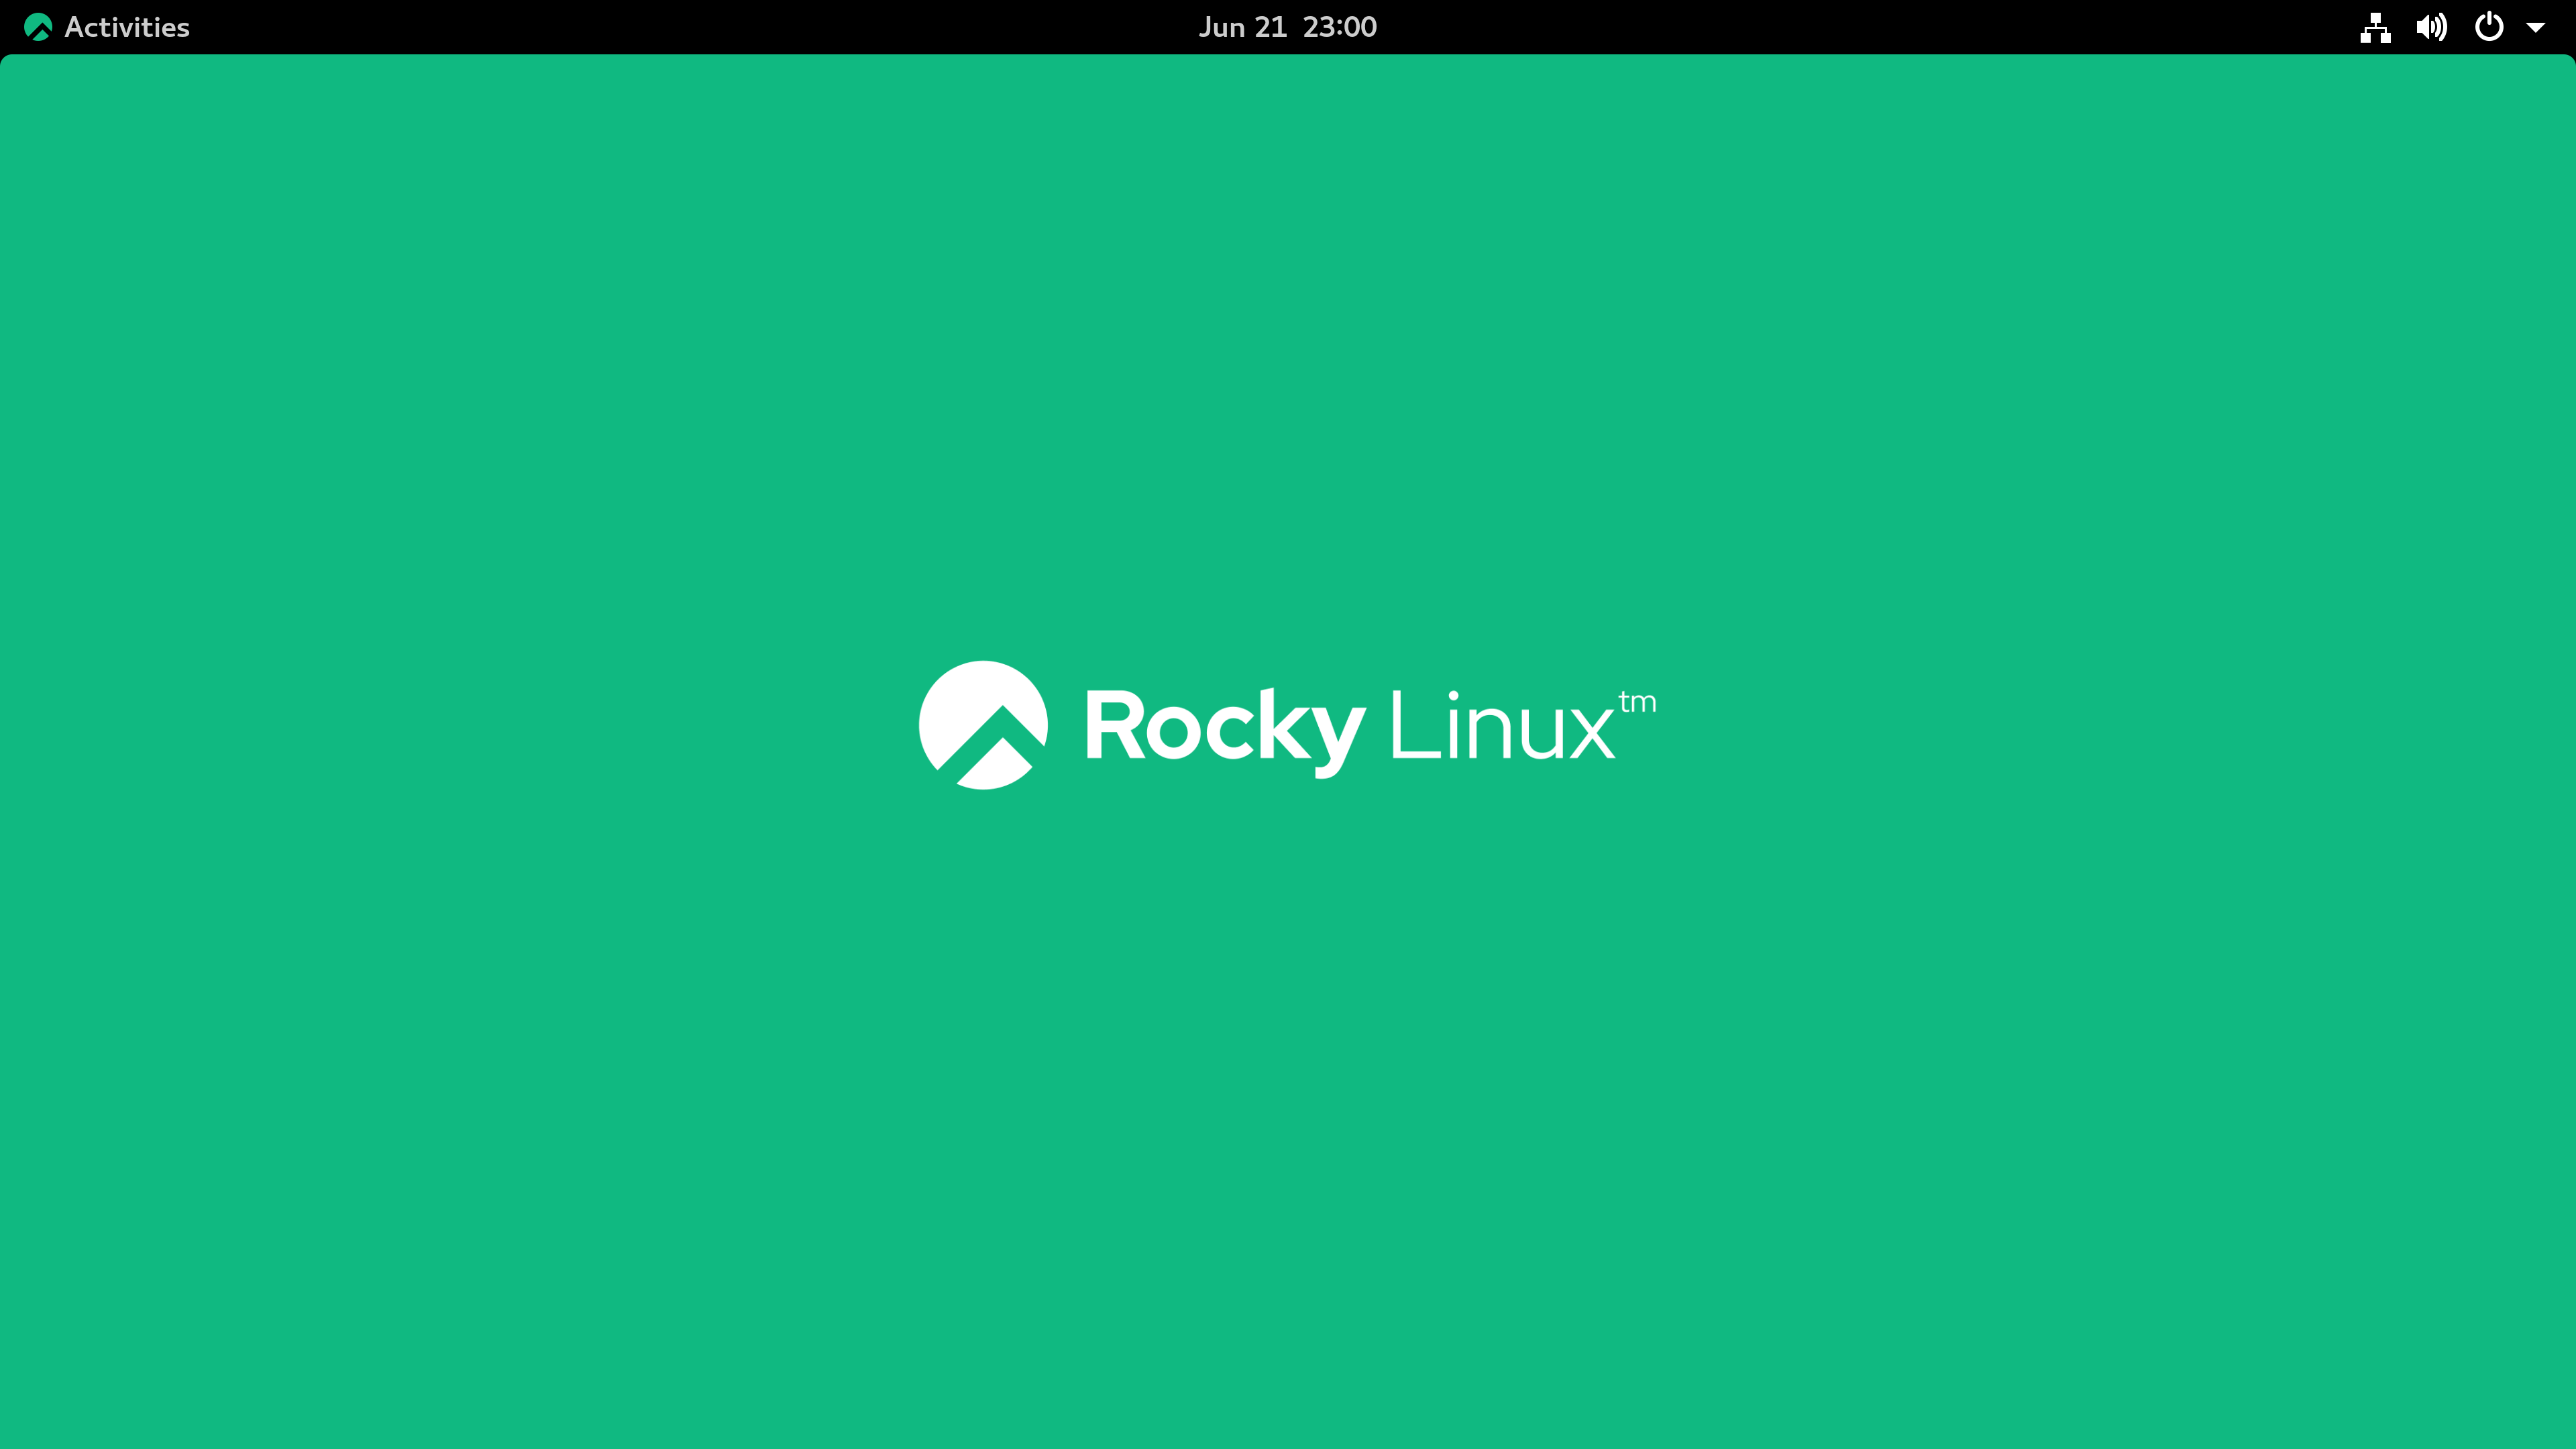 Rocky Linux 9.0 发布 - RHEL 下游免费发行版 (CentOS 的权威替代)